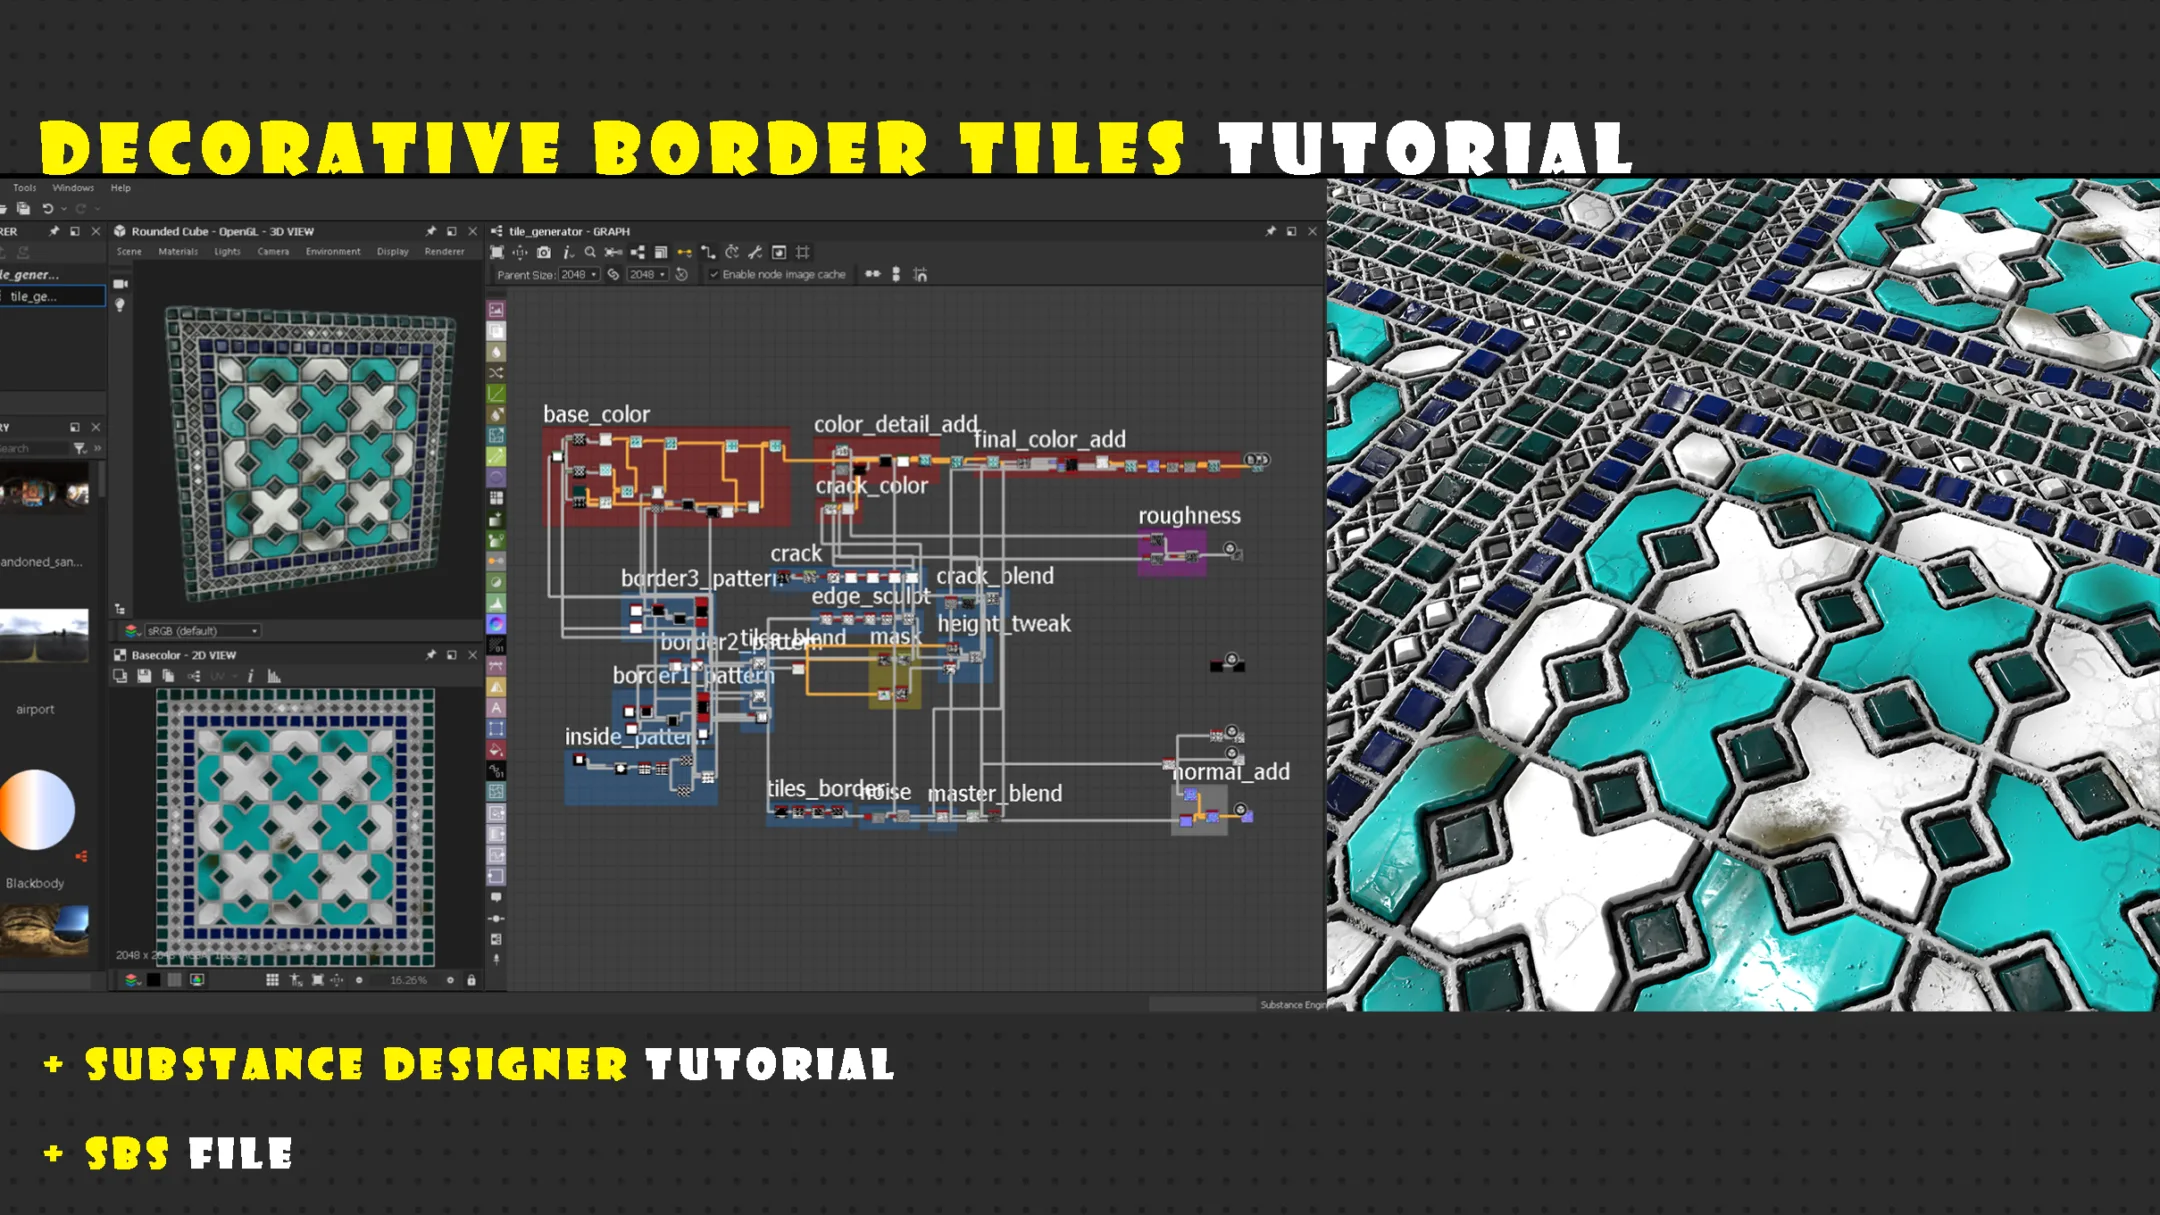 Decorative border tiles - Substance 3D Designer